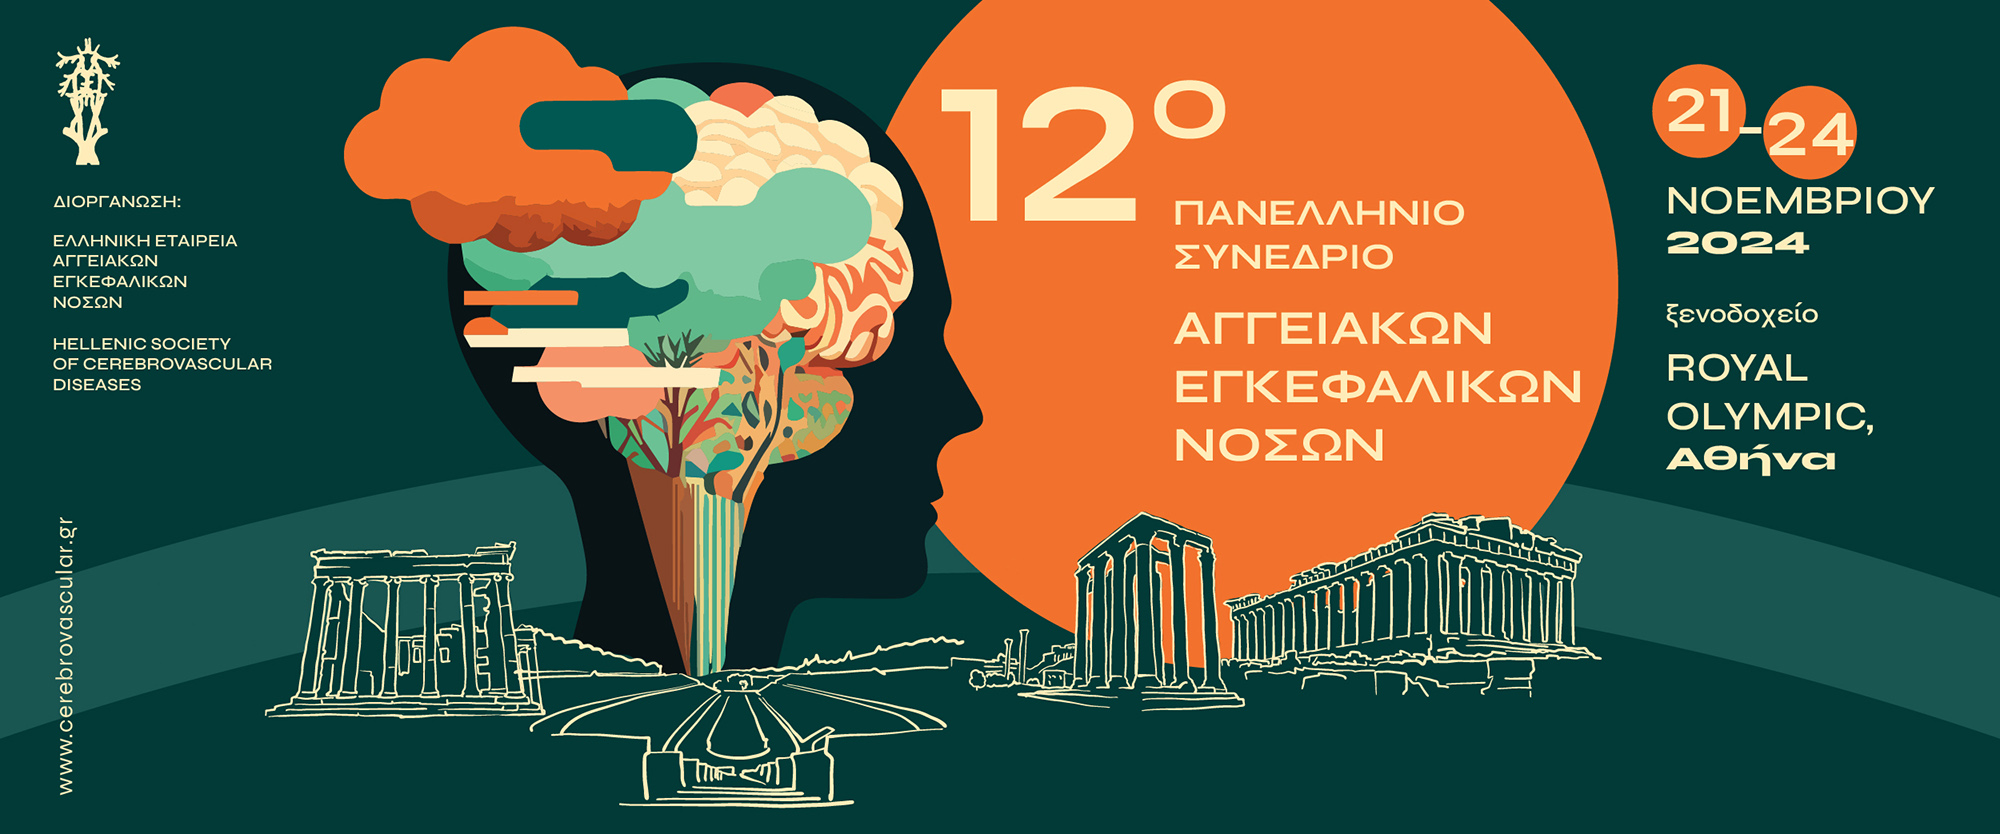 12o Πανελλήνιο Συνέδριο Αγγειακών Εγκεφαλικών Νόσων